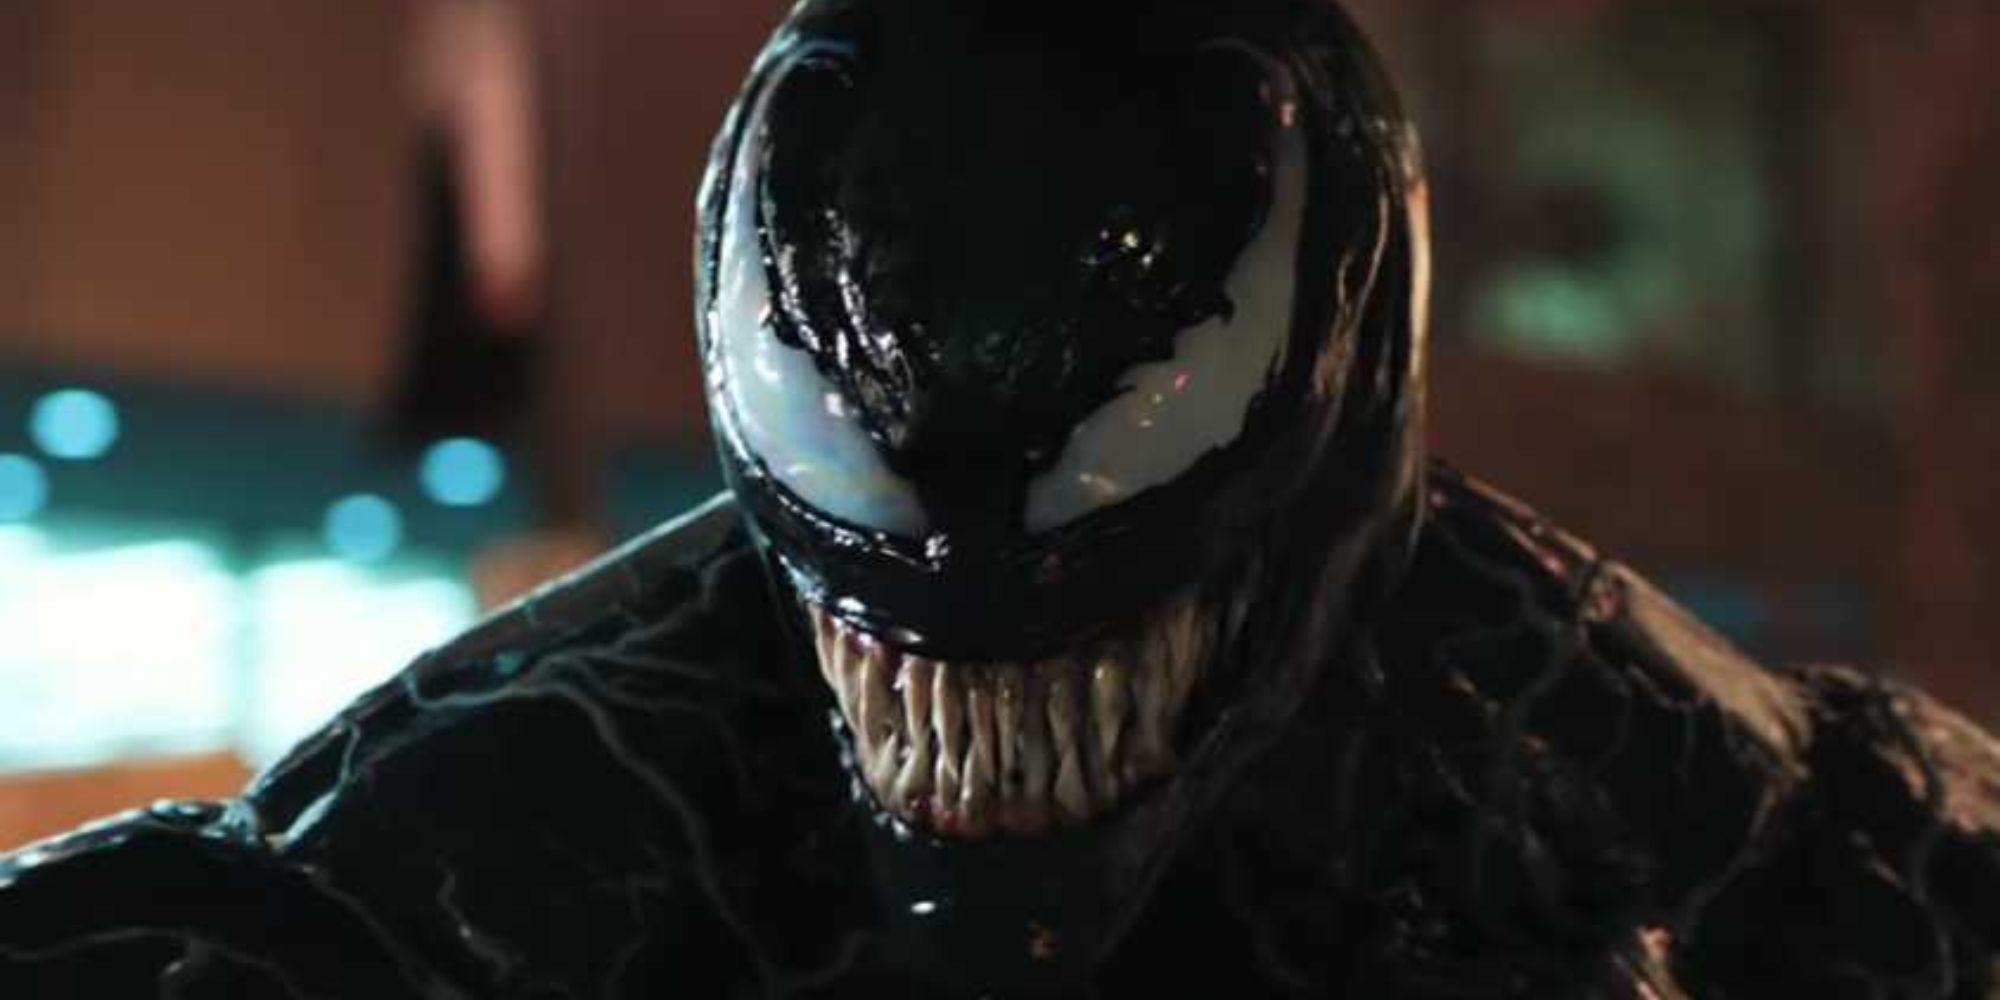 Venom symbiote growling with sharp teeth